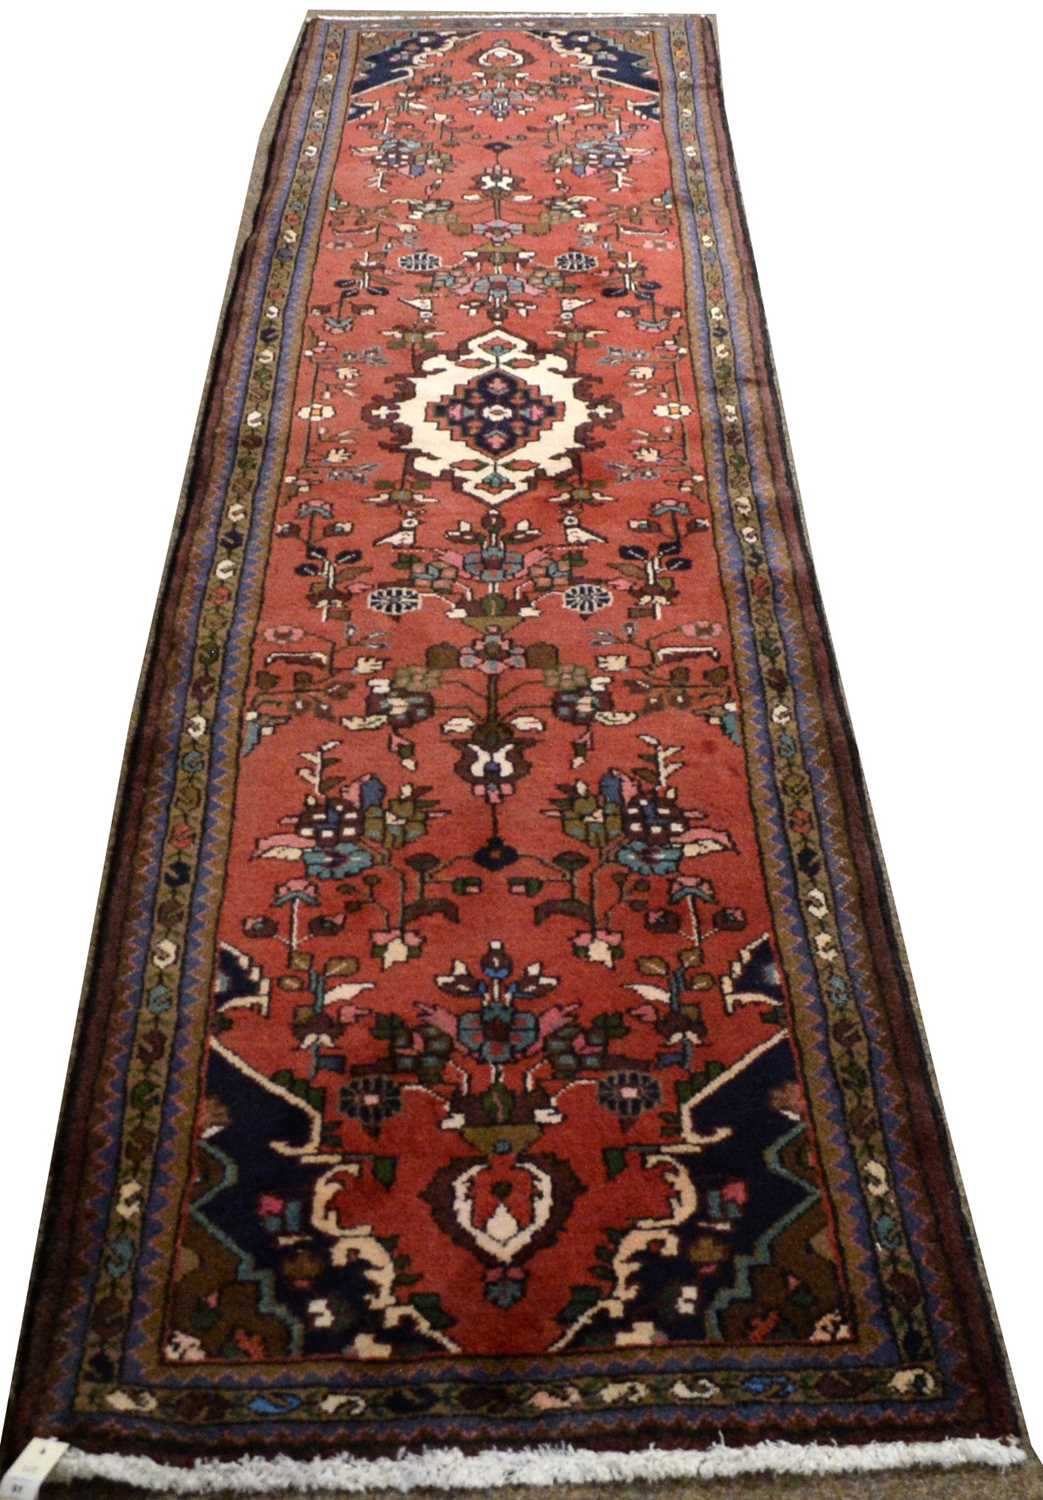 Lot 91 - A vintage Persian runner rug